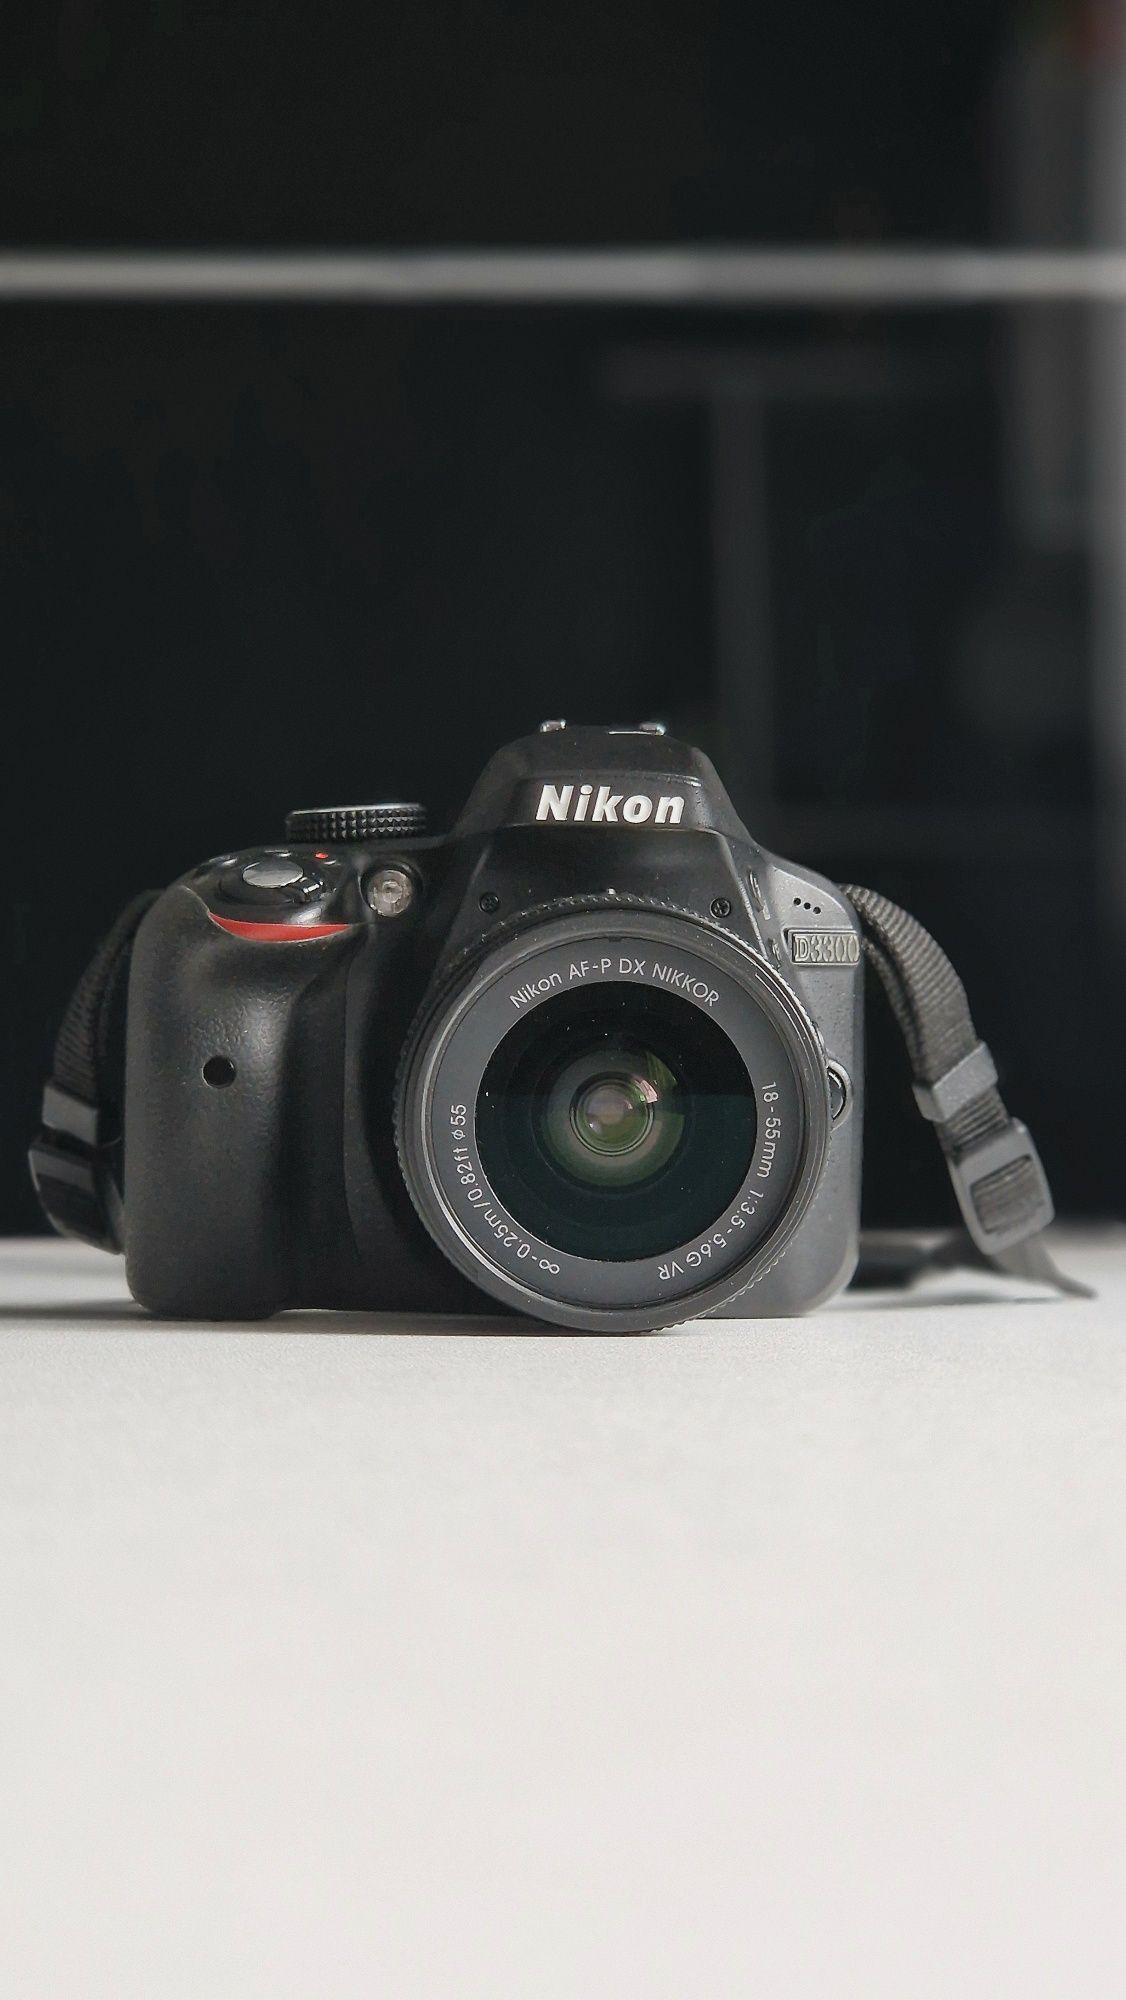 Aparat Nikon D3300 + obiektyw 18-55, lustrzanka